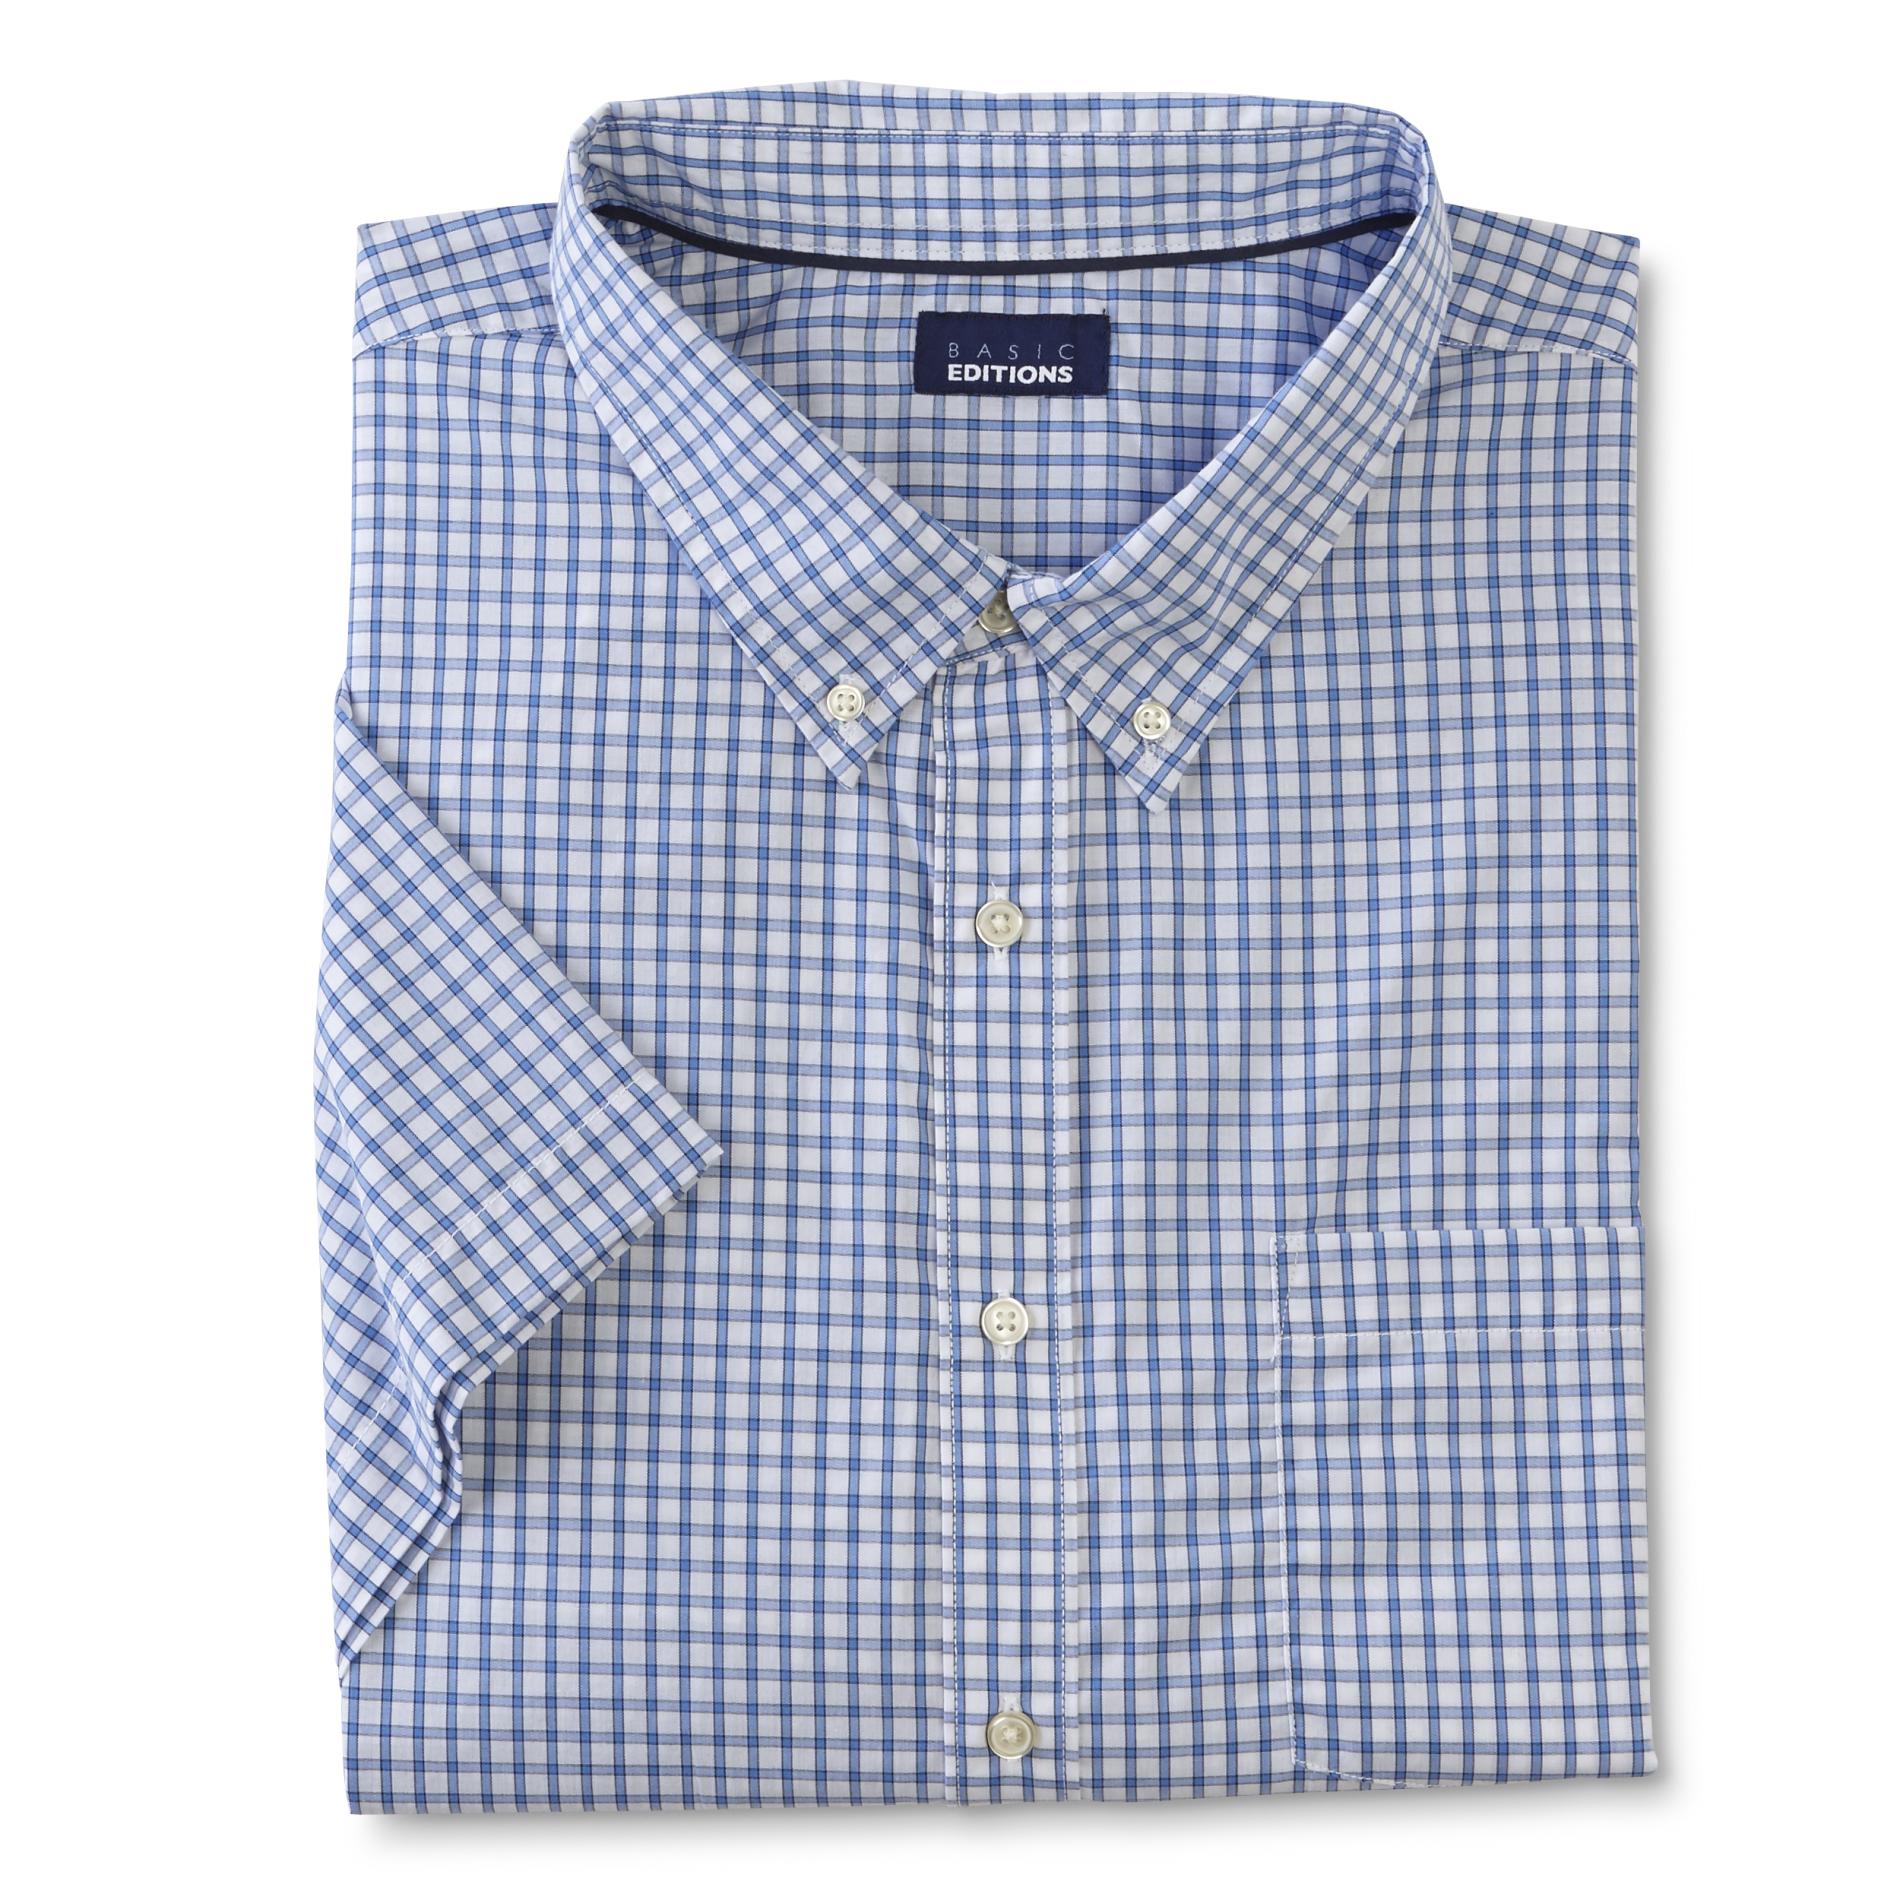 Basic Editions Men's Big & Tall Button-Front Shirt - Tattersall Plaid